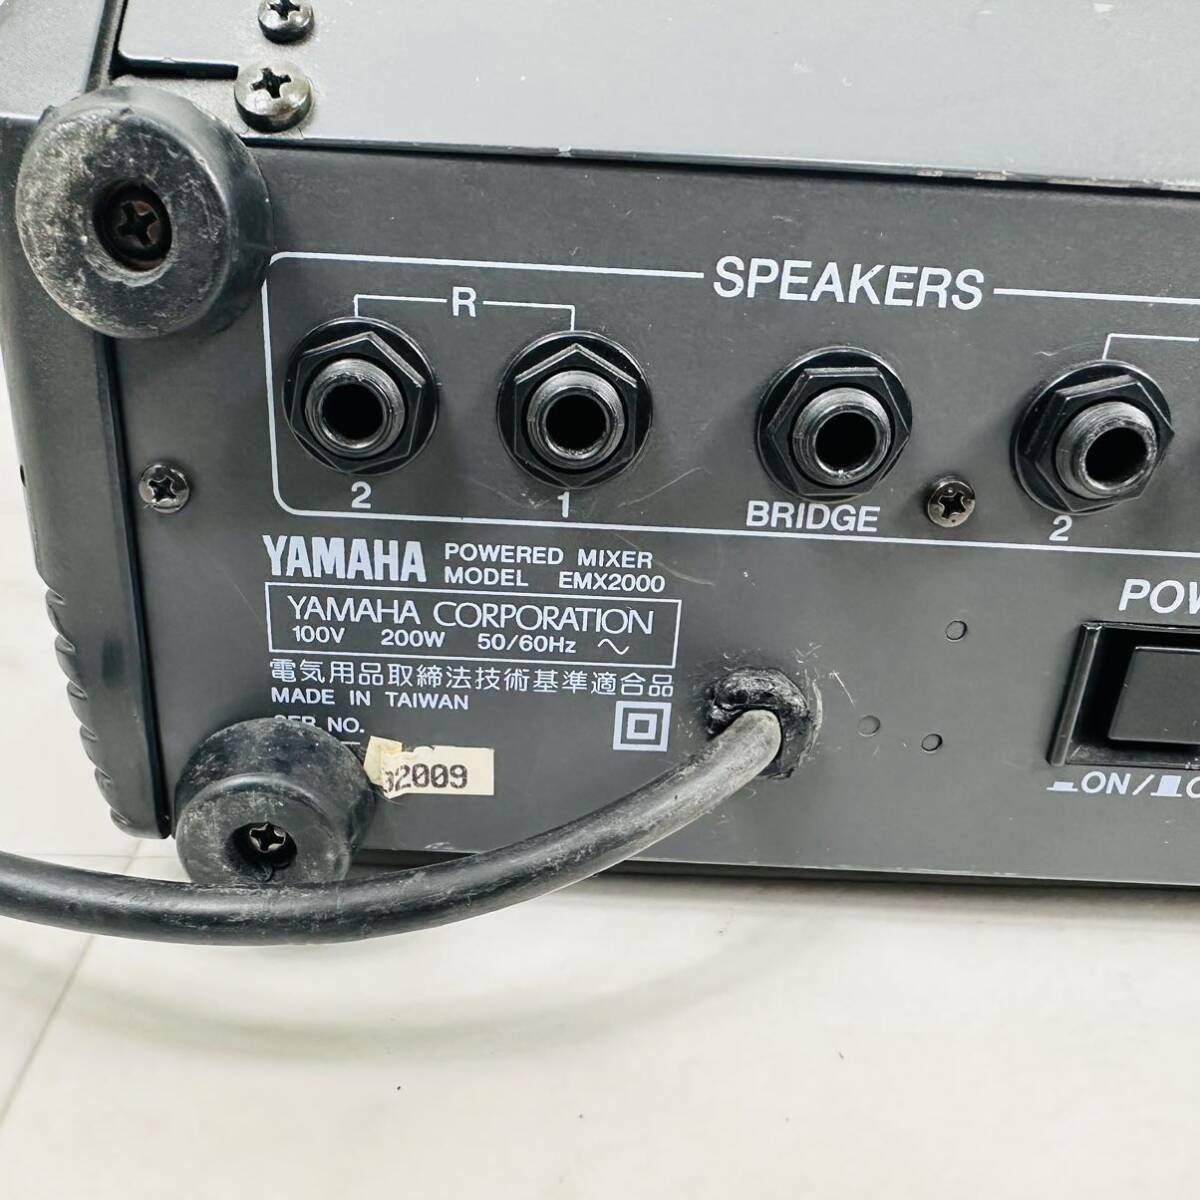 YAMAHA Yamaha Powered миксер POWERED MIXER EMX2000 электризация проверка только б/у товар 